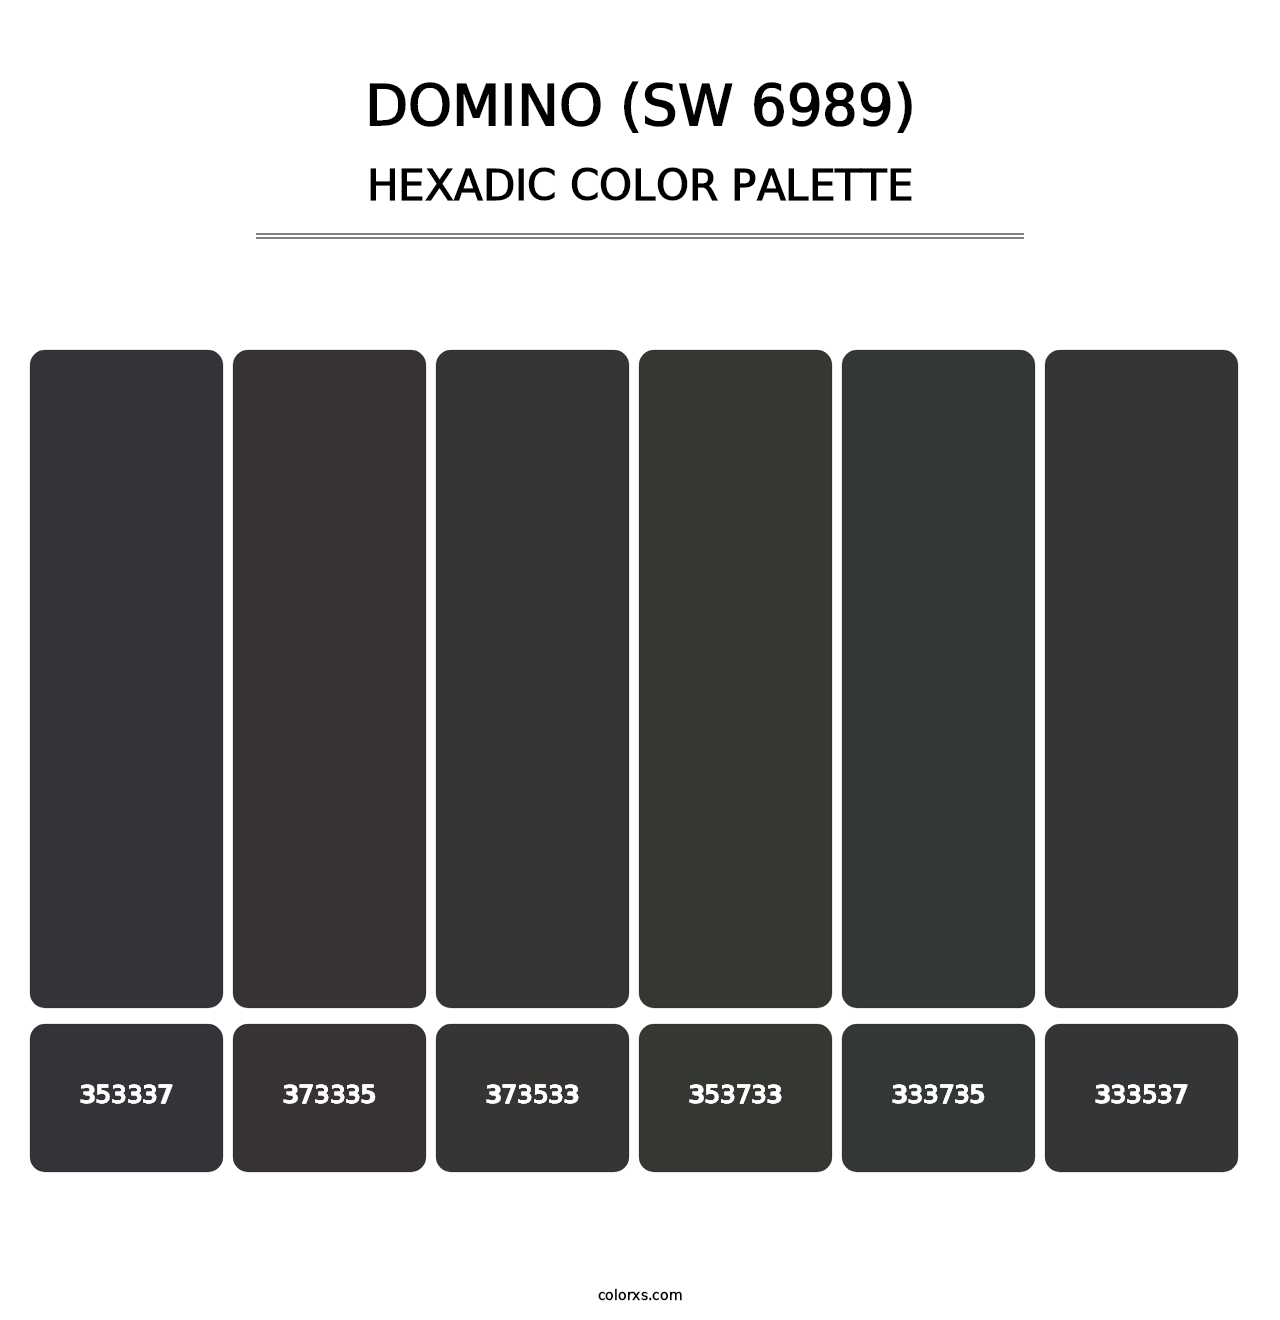 Domino (SW 6989) - Hexadic Color Palette